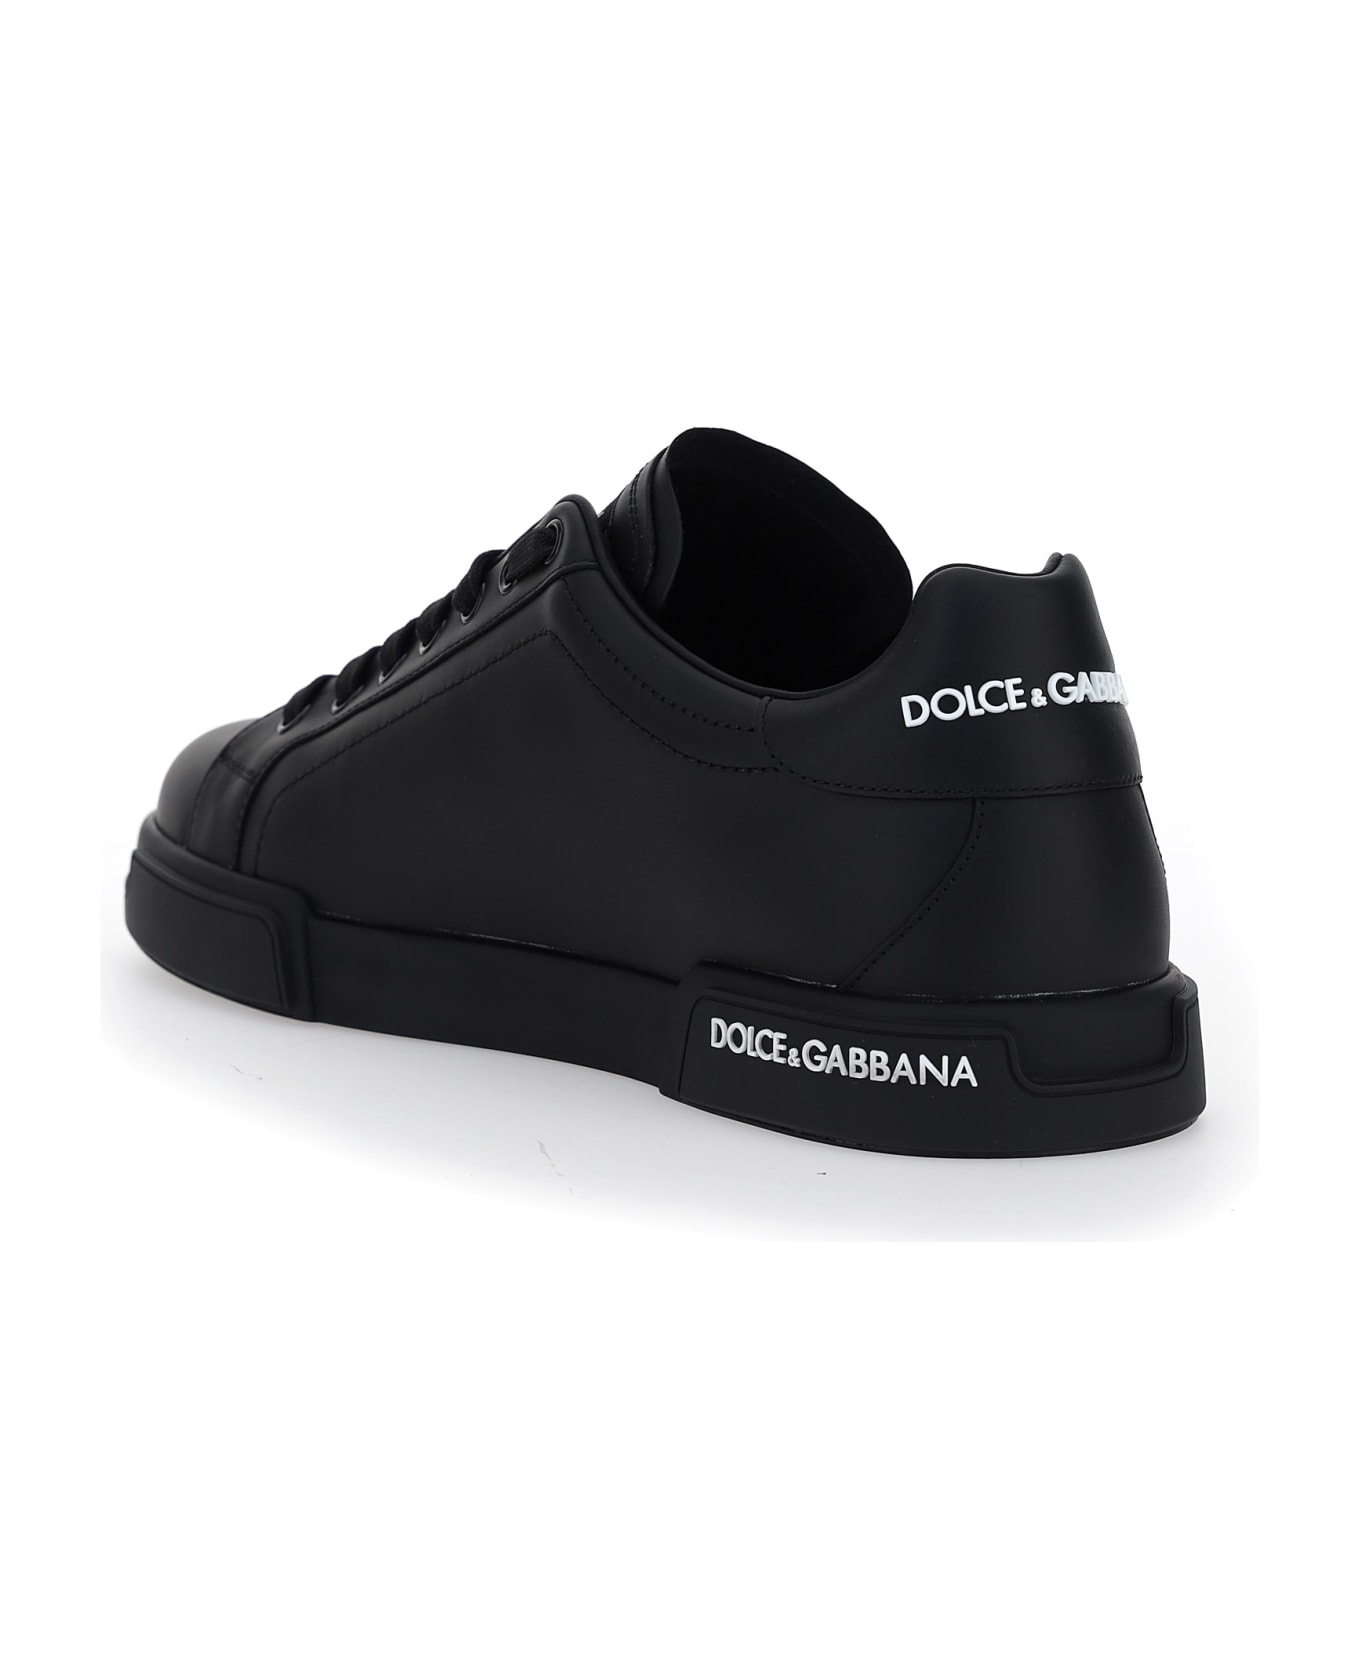 Dolce & Gabbana Portofino Black Leather Sneakers - Black